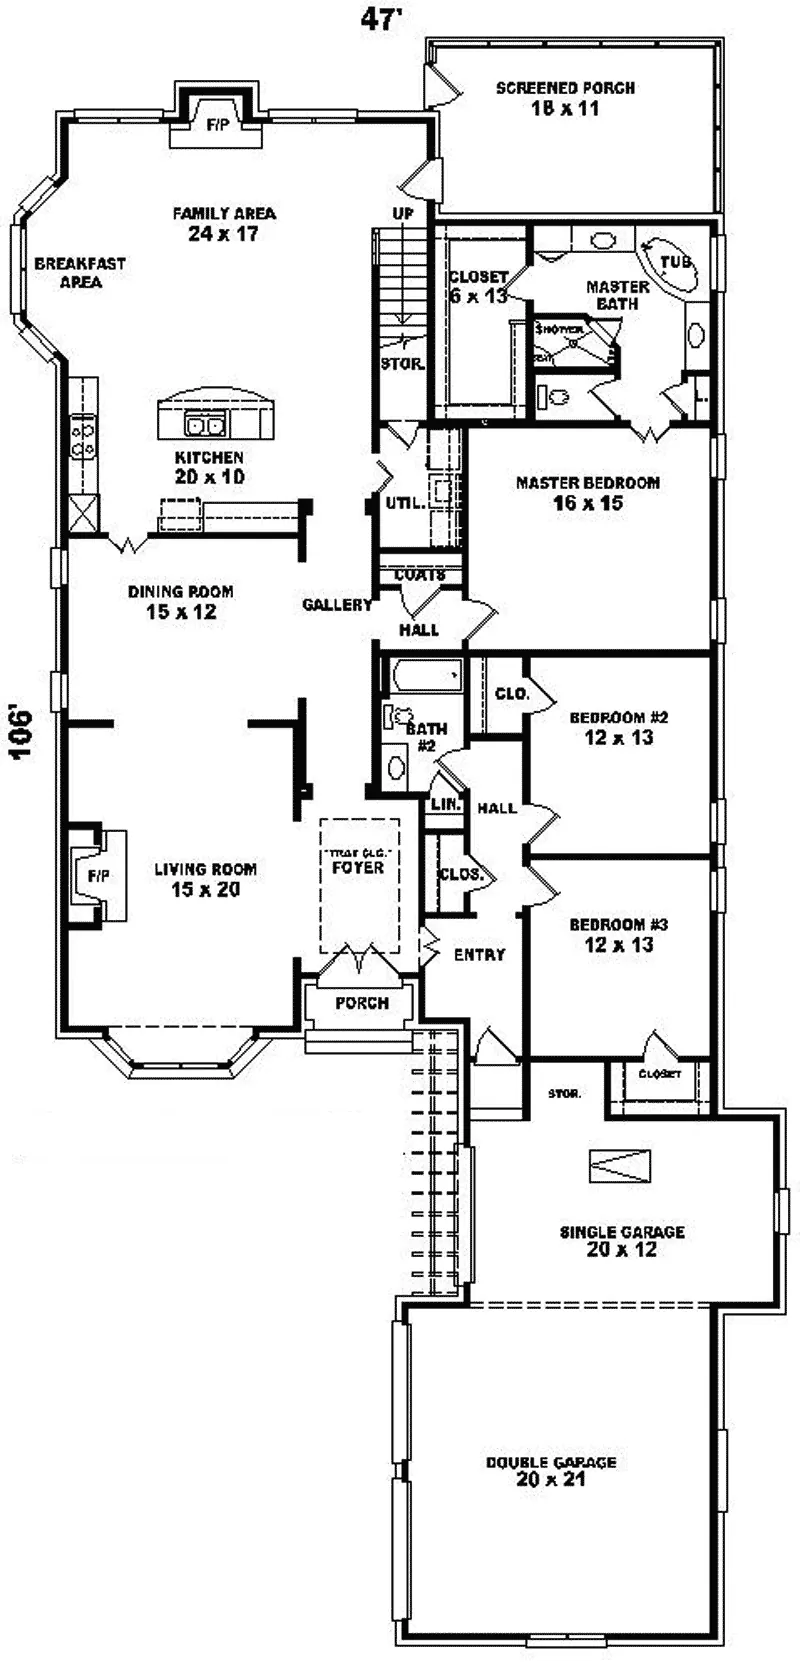 European House Plan First Floor - Paquerette European Home 087D-0801 - Shop House Plans and More